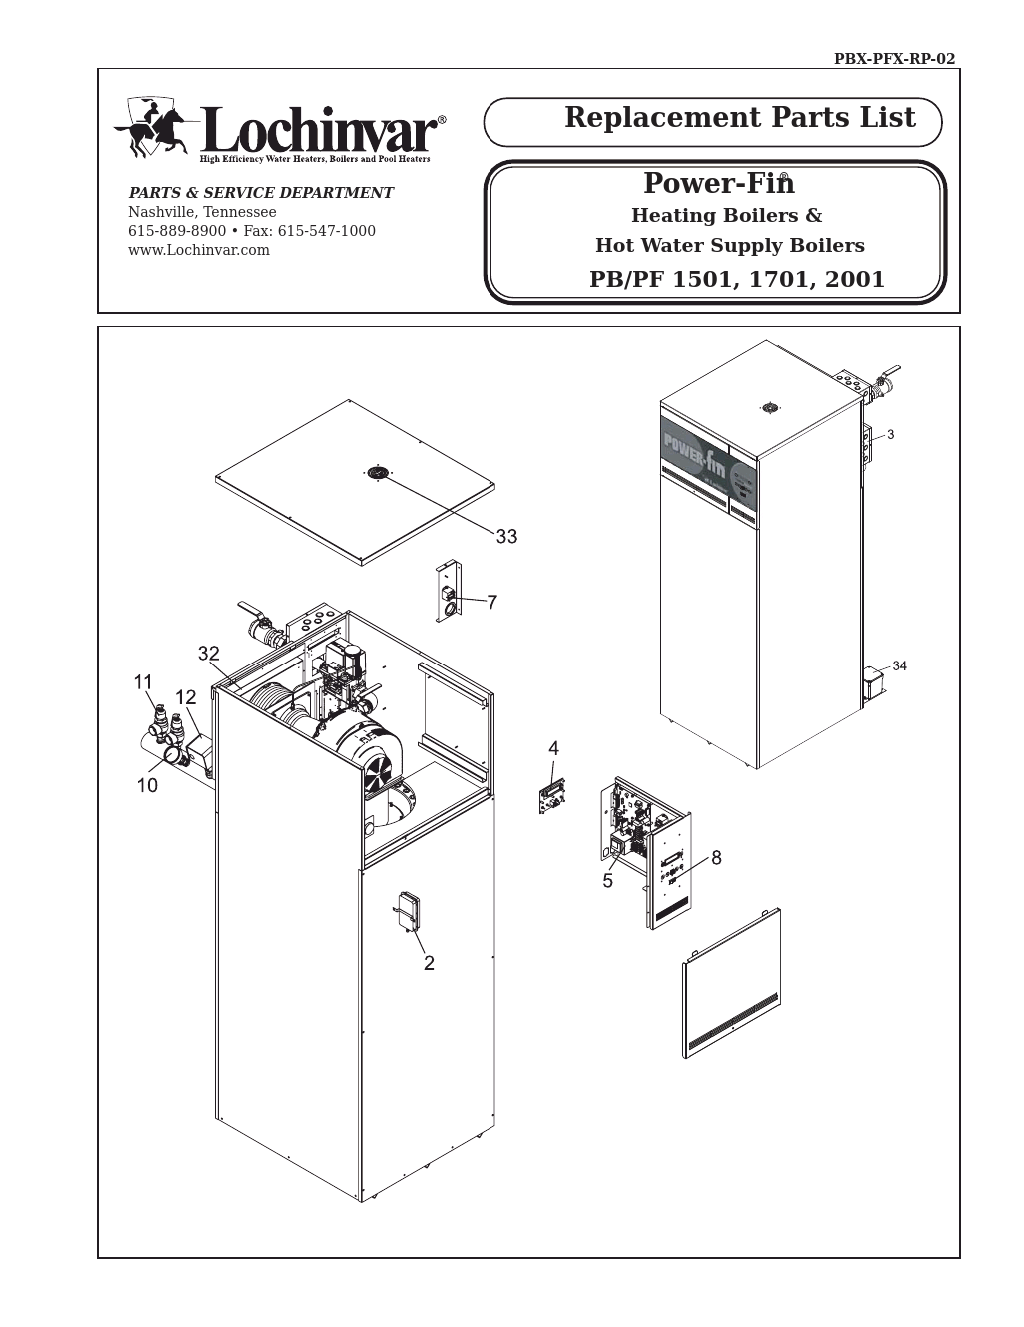 Power-Fin Heating Boilers & Hot Water Supply Boilers 1701